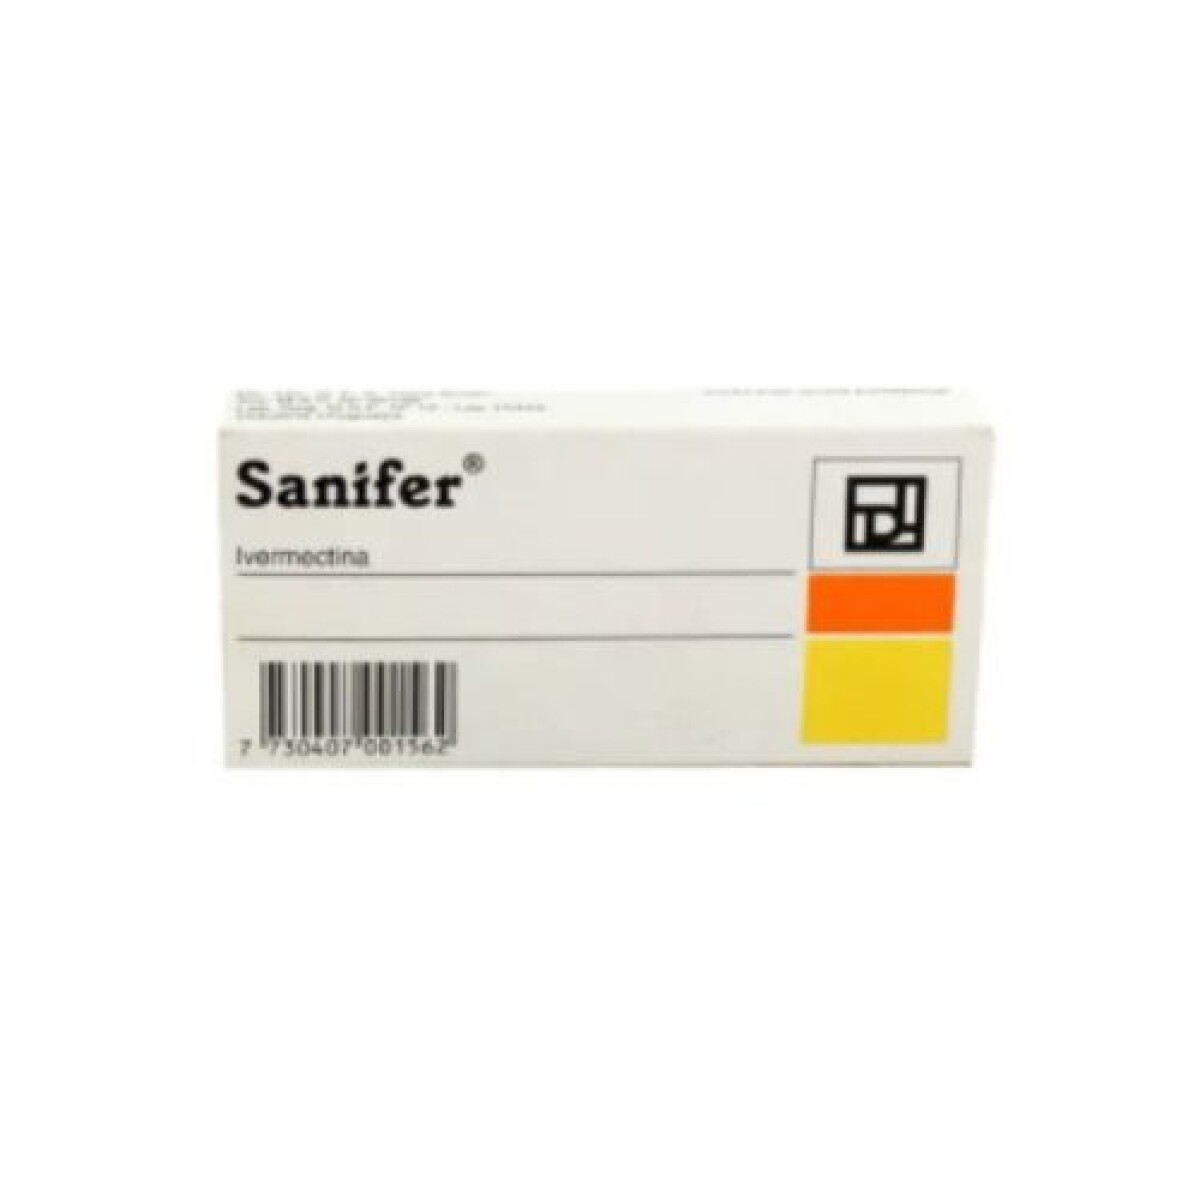 Sanifer 6 mg x 3 comprimidos 